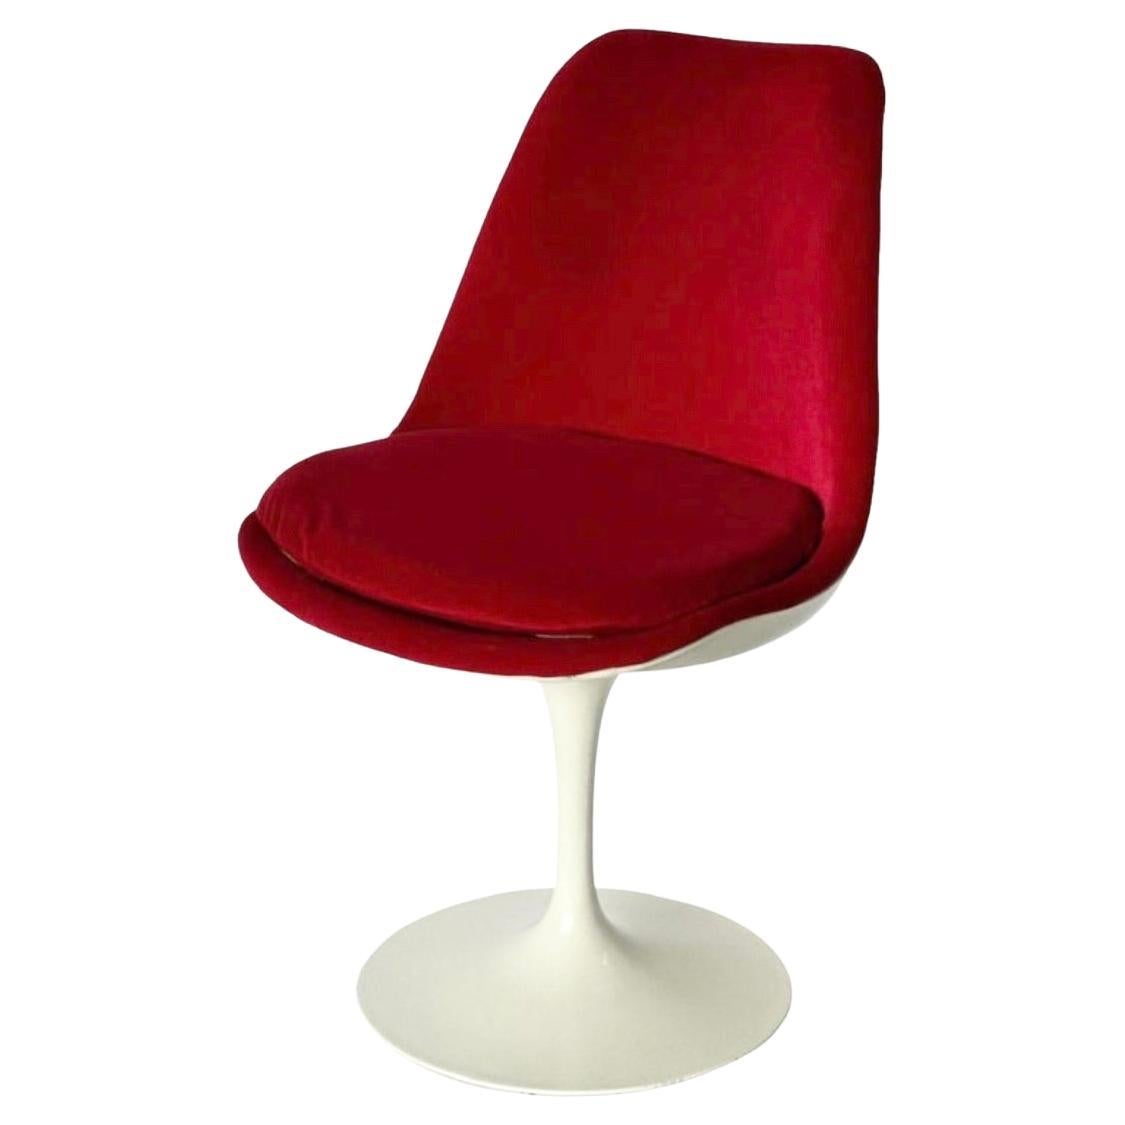 Velvet Tulip Side Chair Designed by Eero Saarinen for Knoll